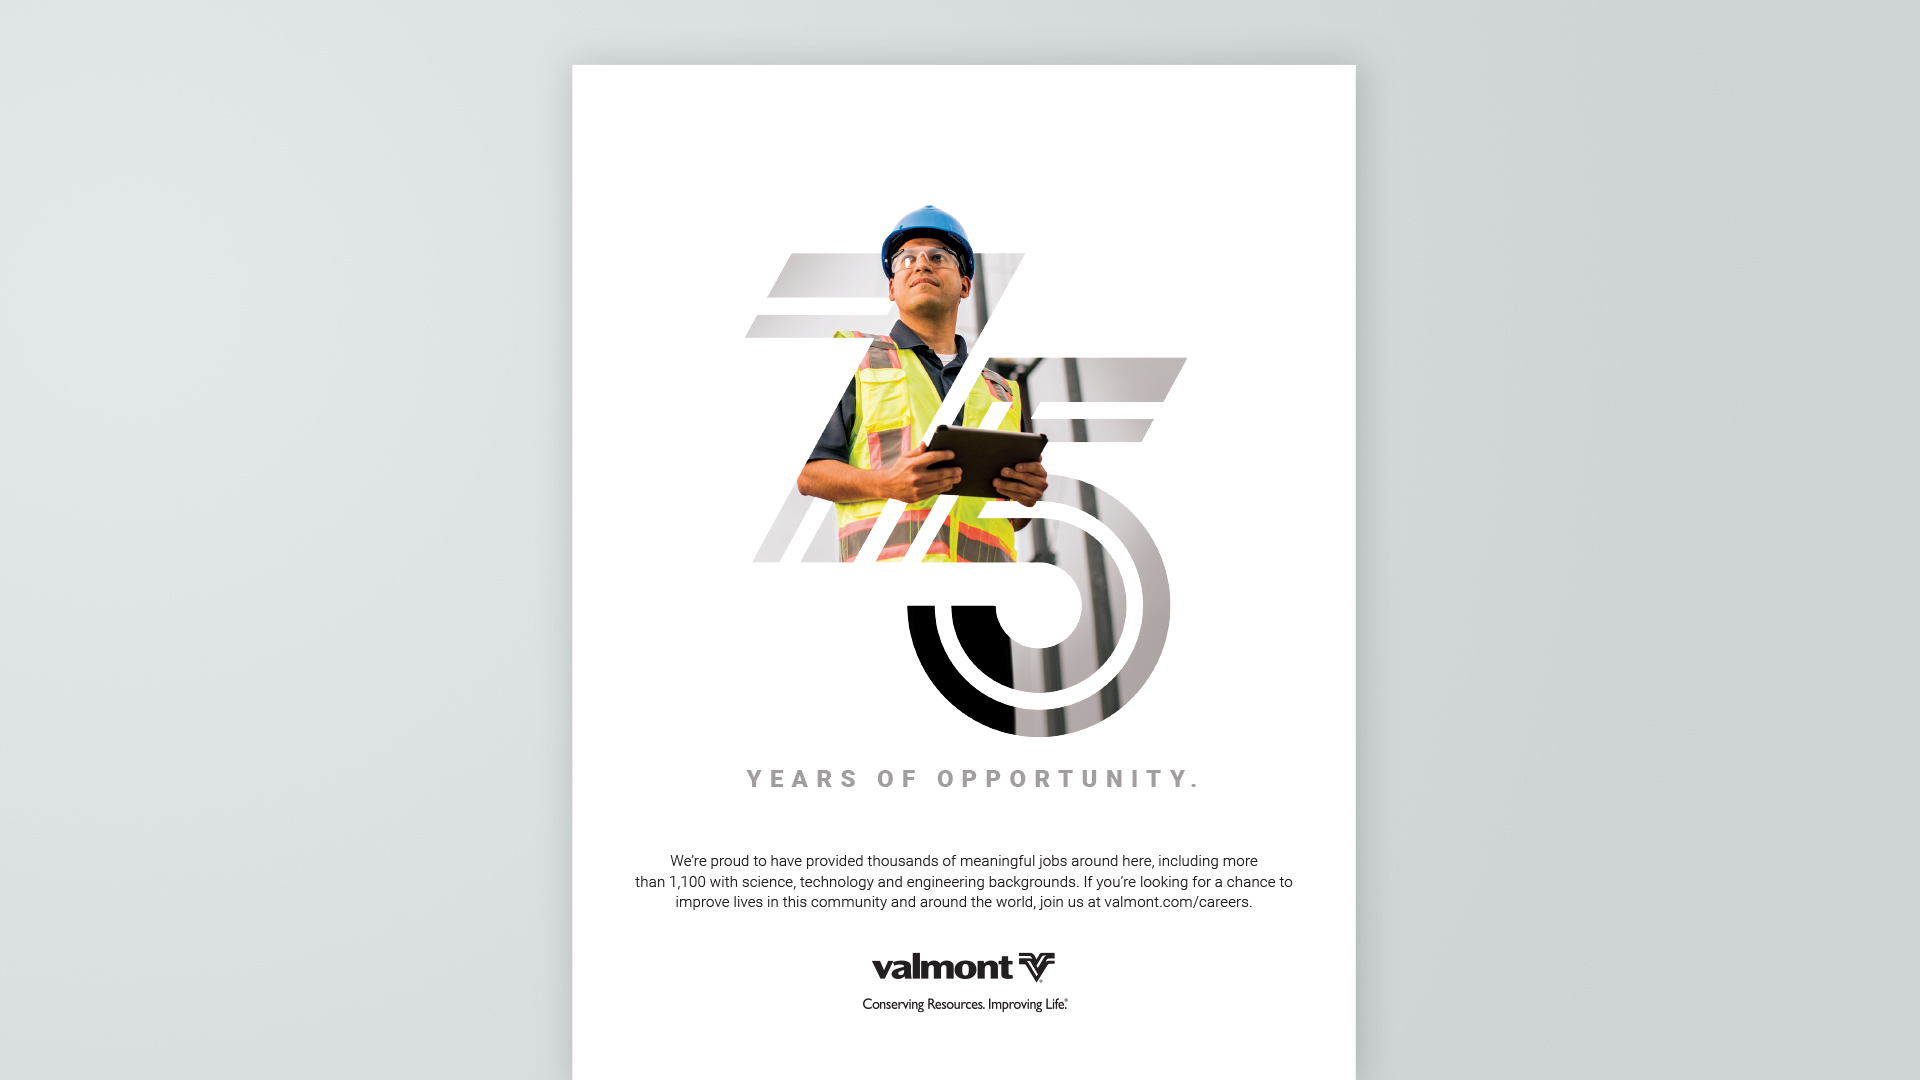 Valmont Anniversary Campaign Omaha: Ad Design